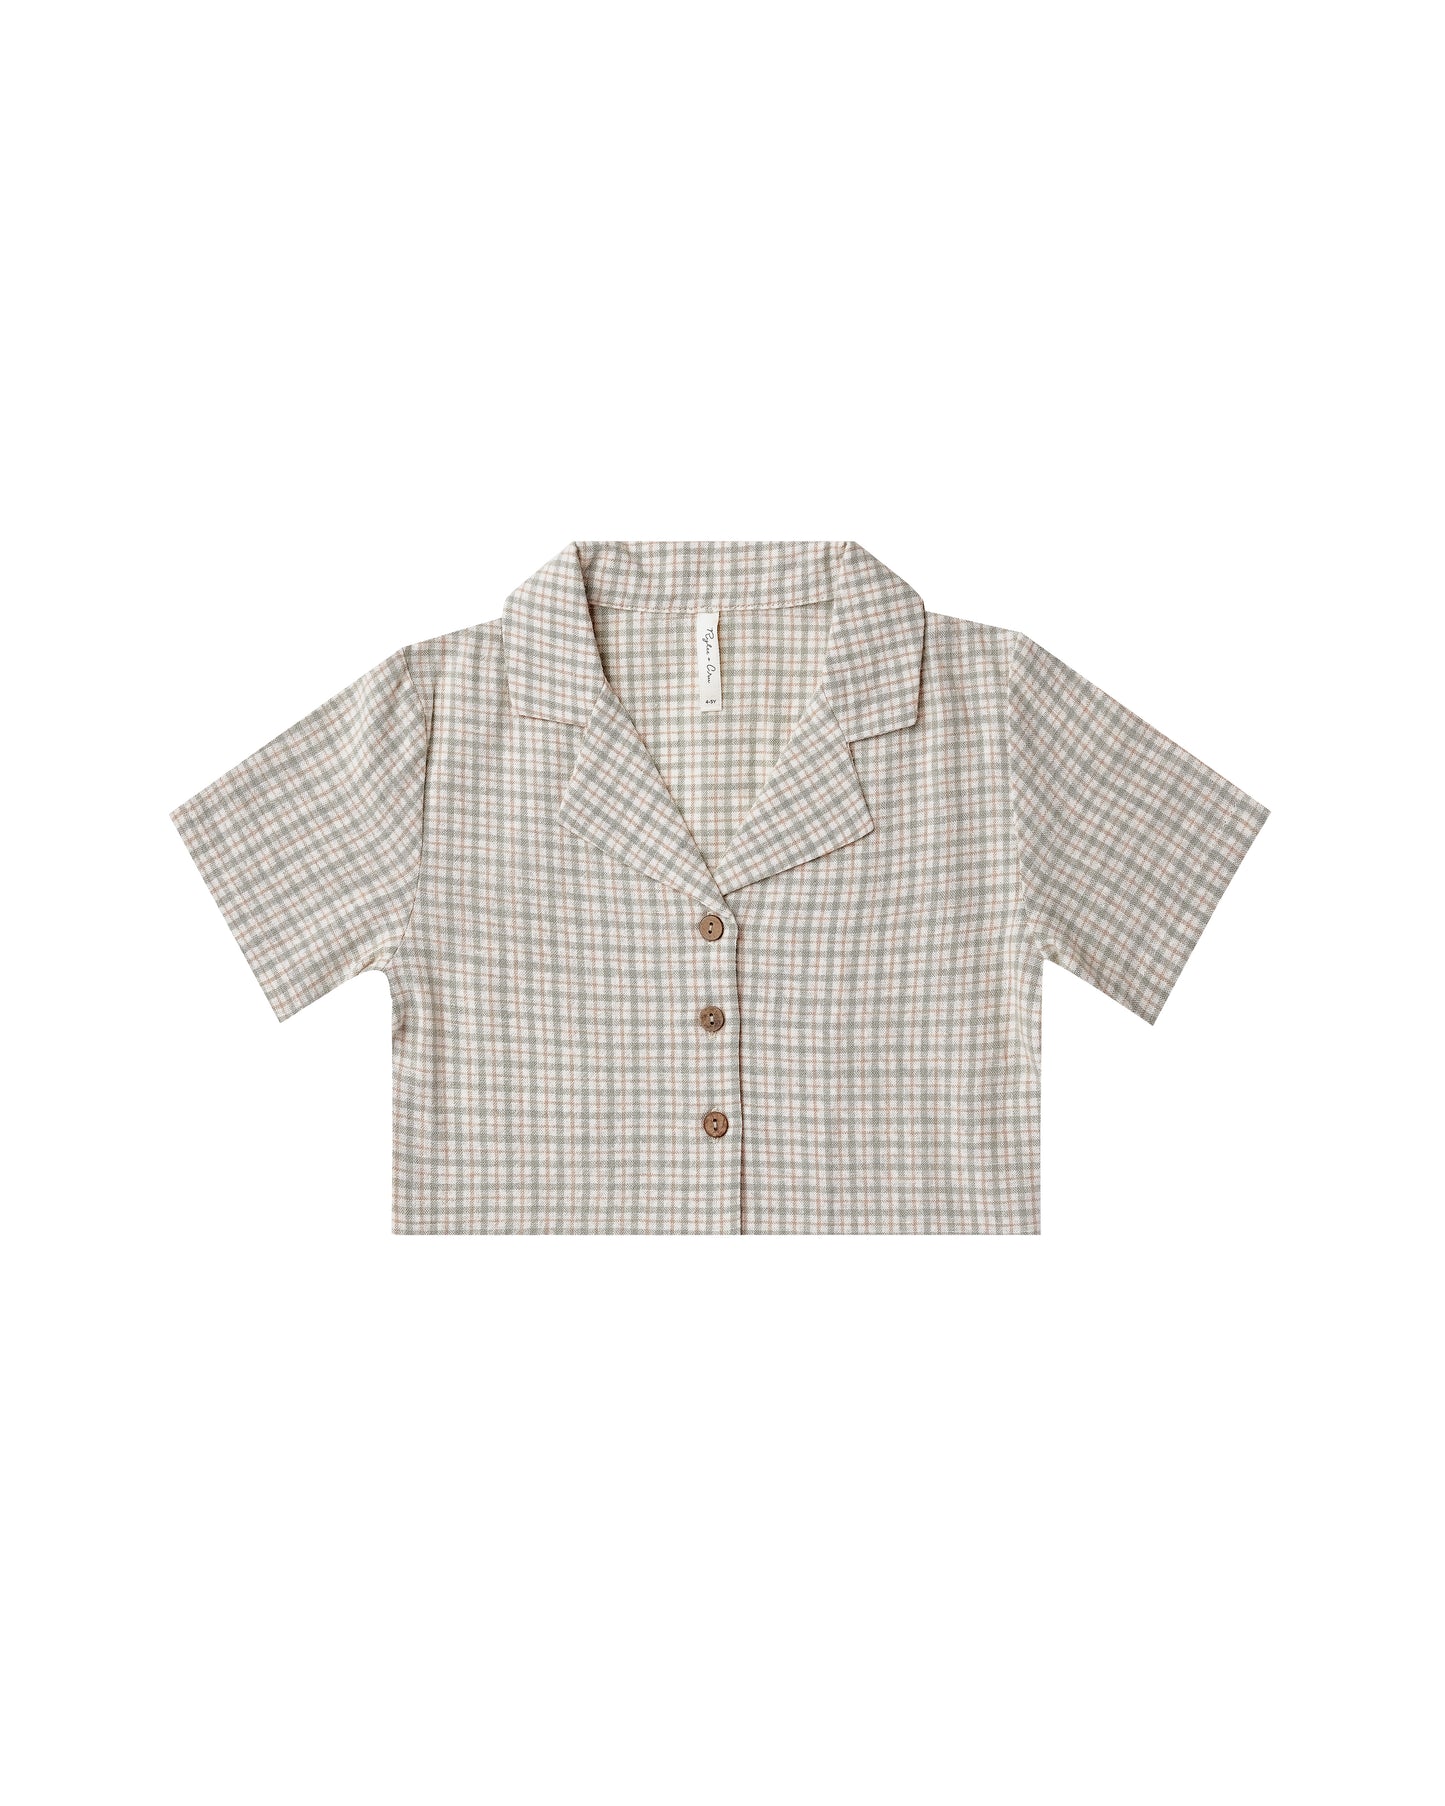 Rylee + Cru - Cropped Collared Shirt - Laurel Plaid